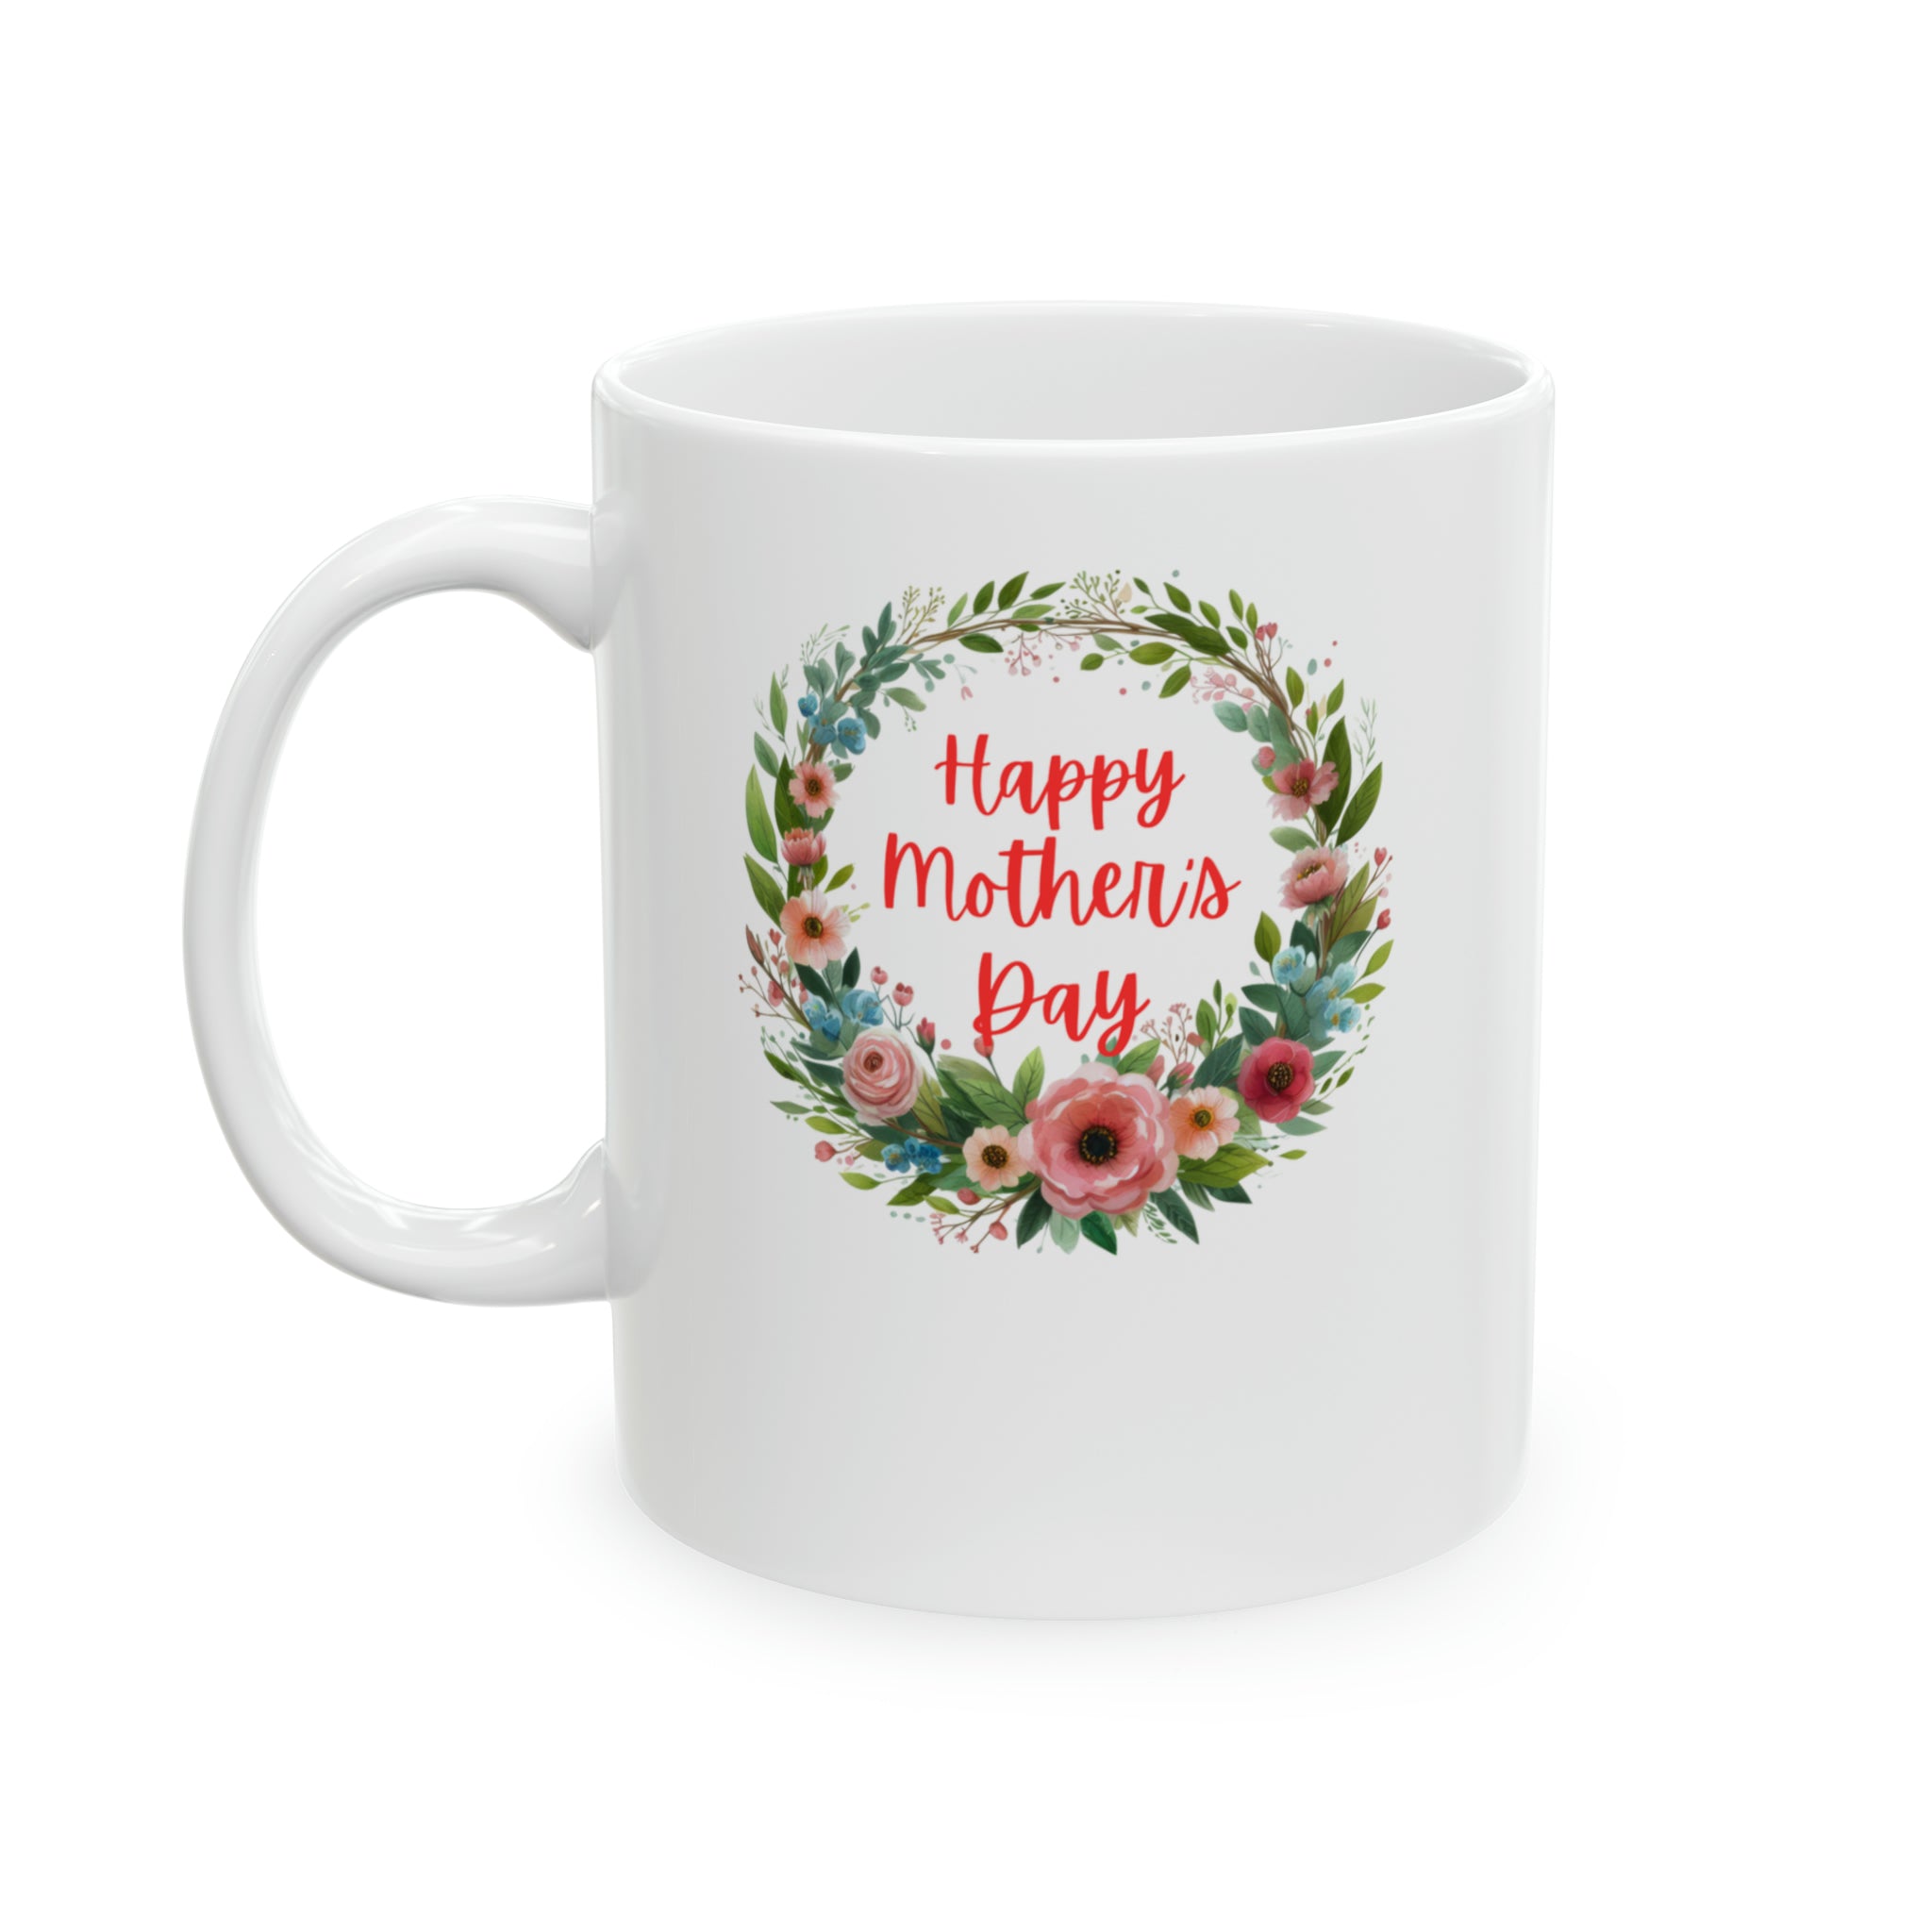 Happy Mother's day Ceramic Mug, 11oz Mug, Personalized Mug for Mom, Gift for Mom, Mother's Day Gift, Gift for New Mom